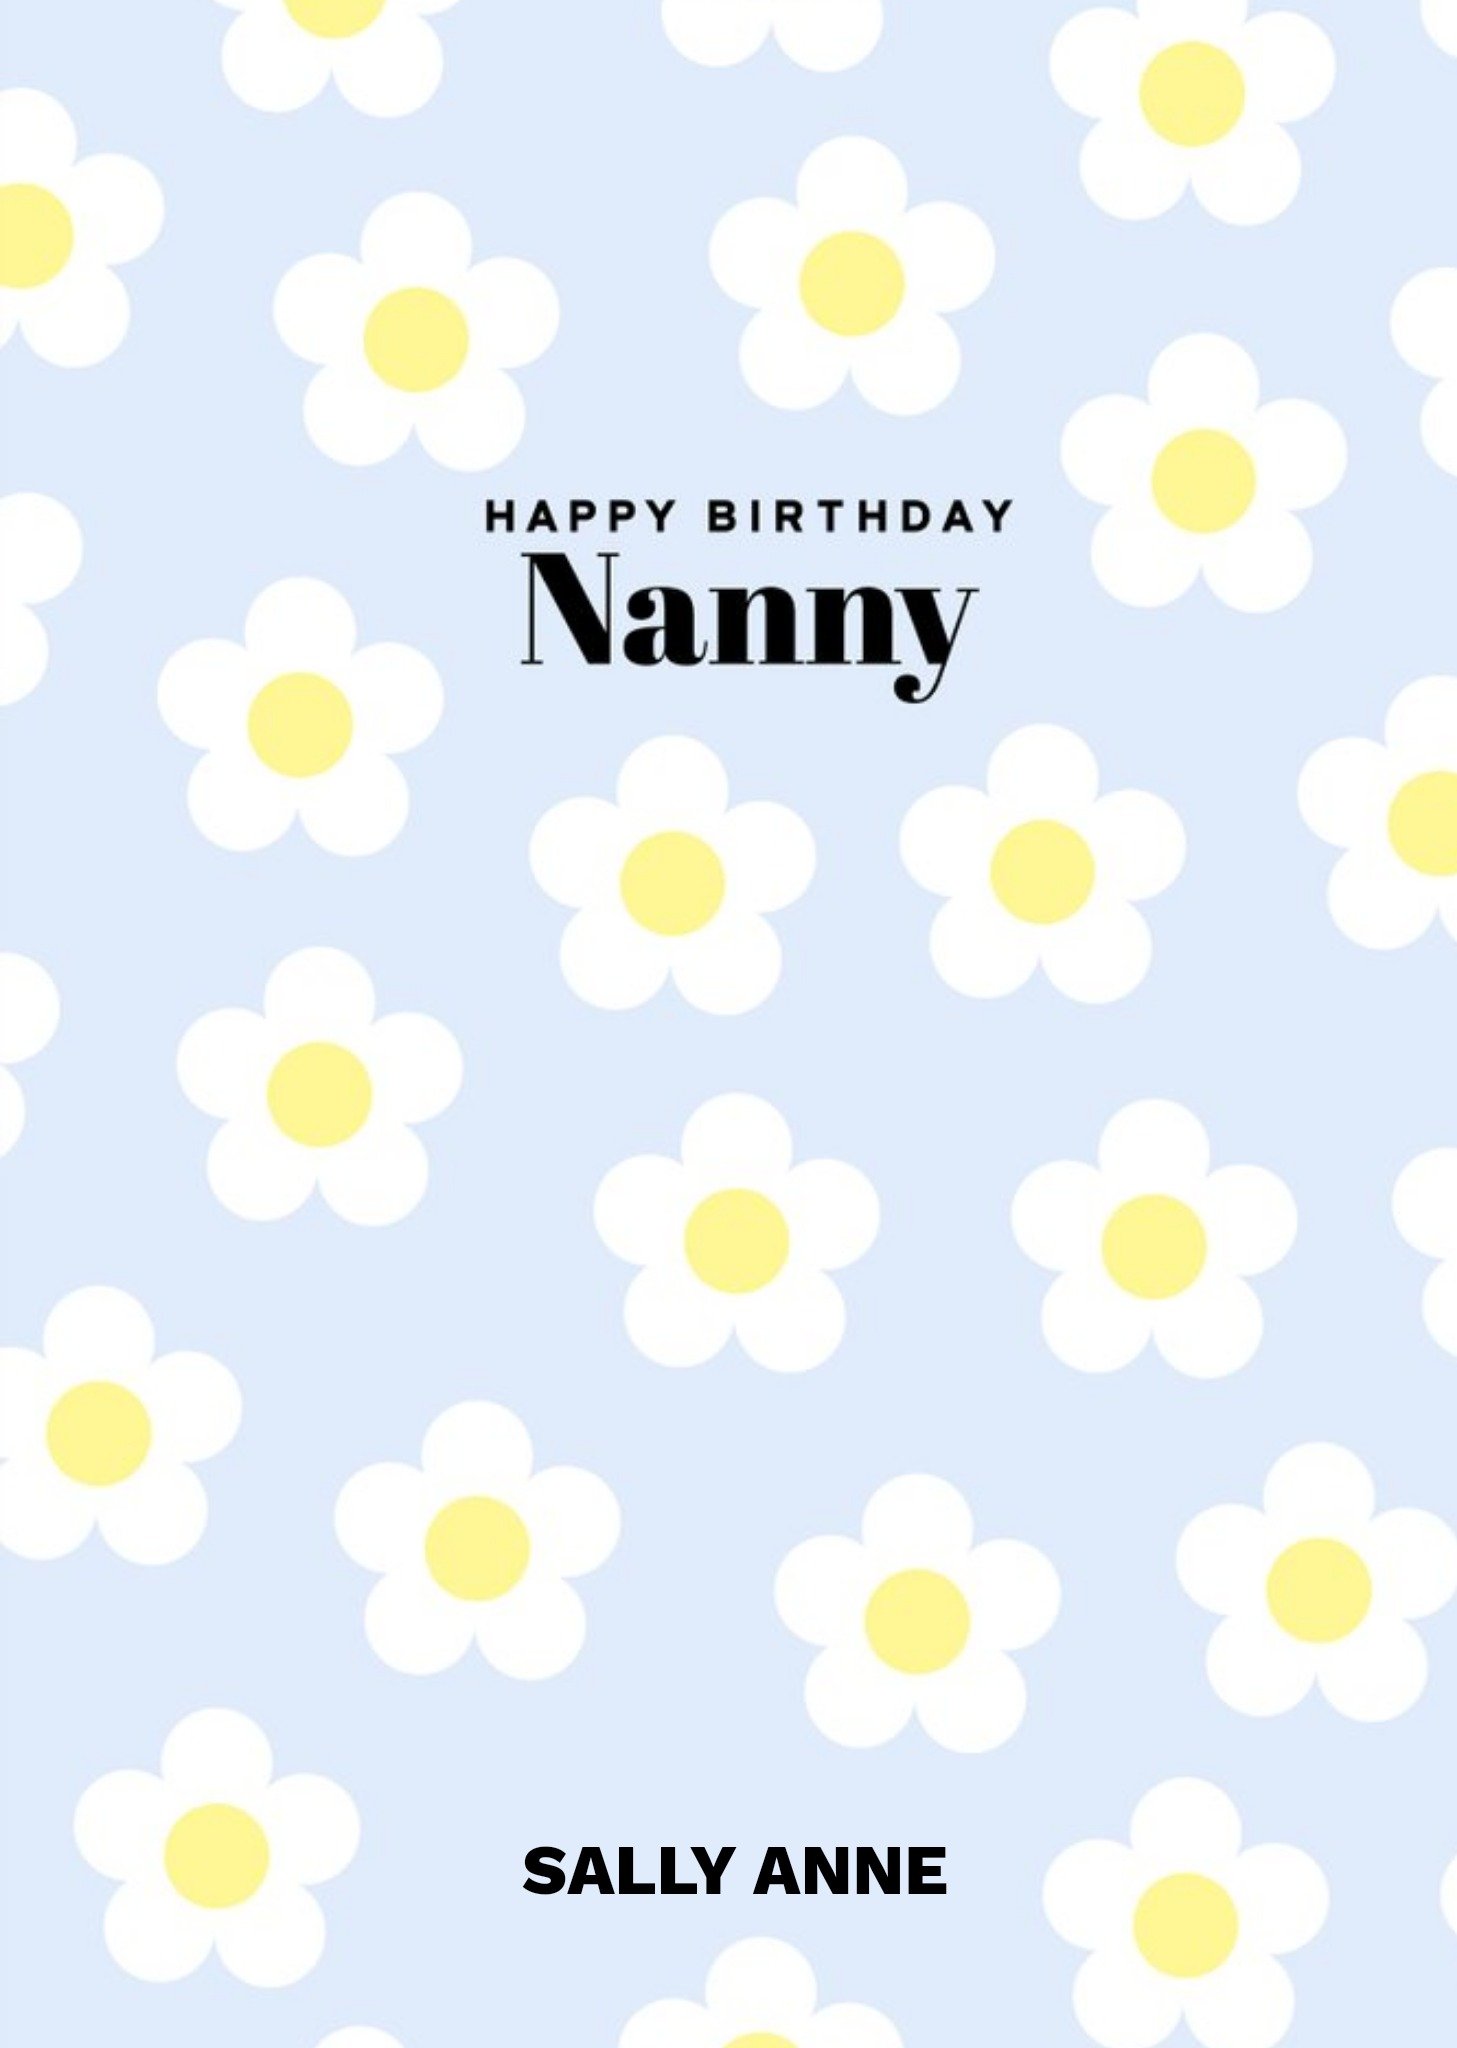 Moonpig Pearl And Ivy Nanny Floral Pattern Birthday Card Ecard